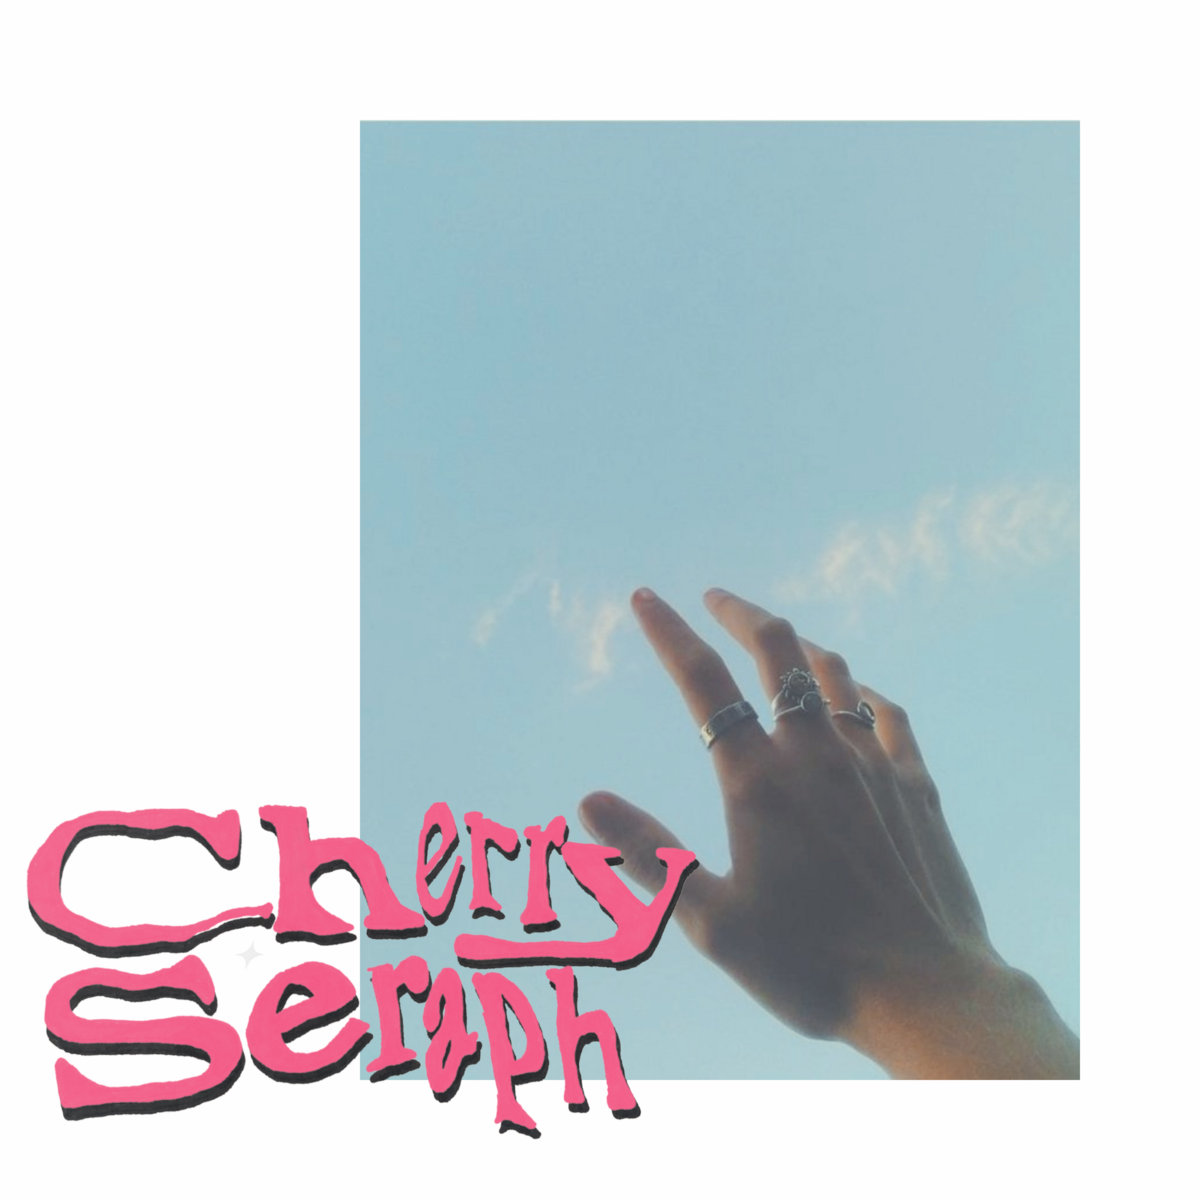 CHERRY SERAPH – EBB AND FLOW